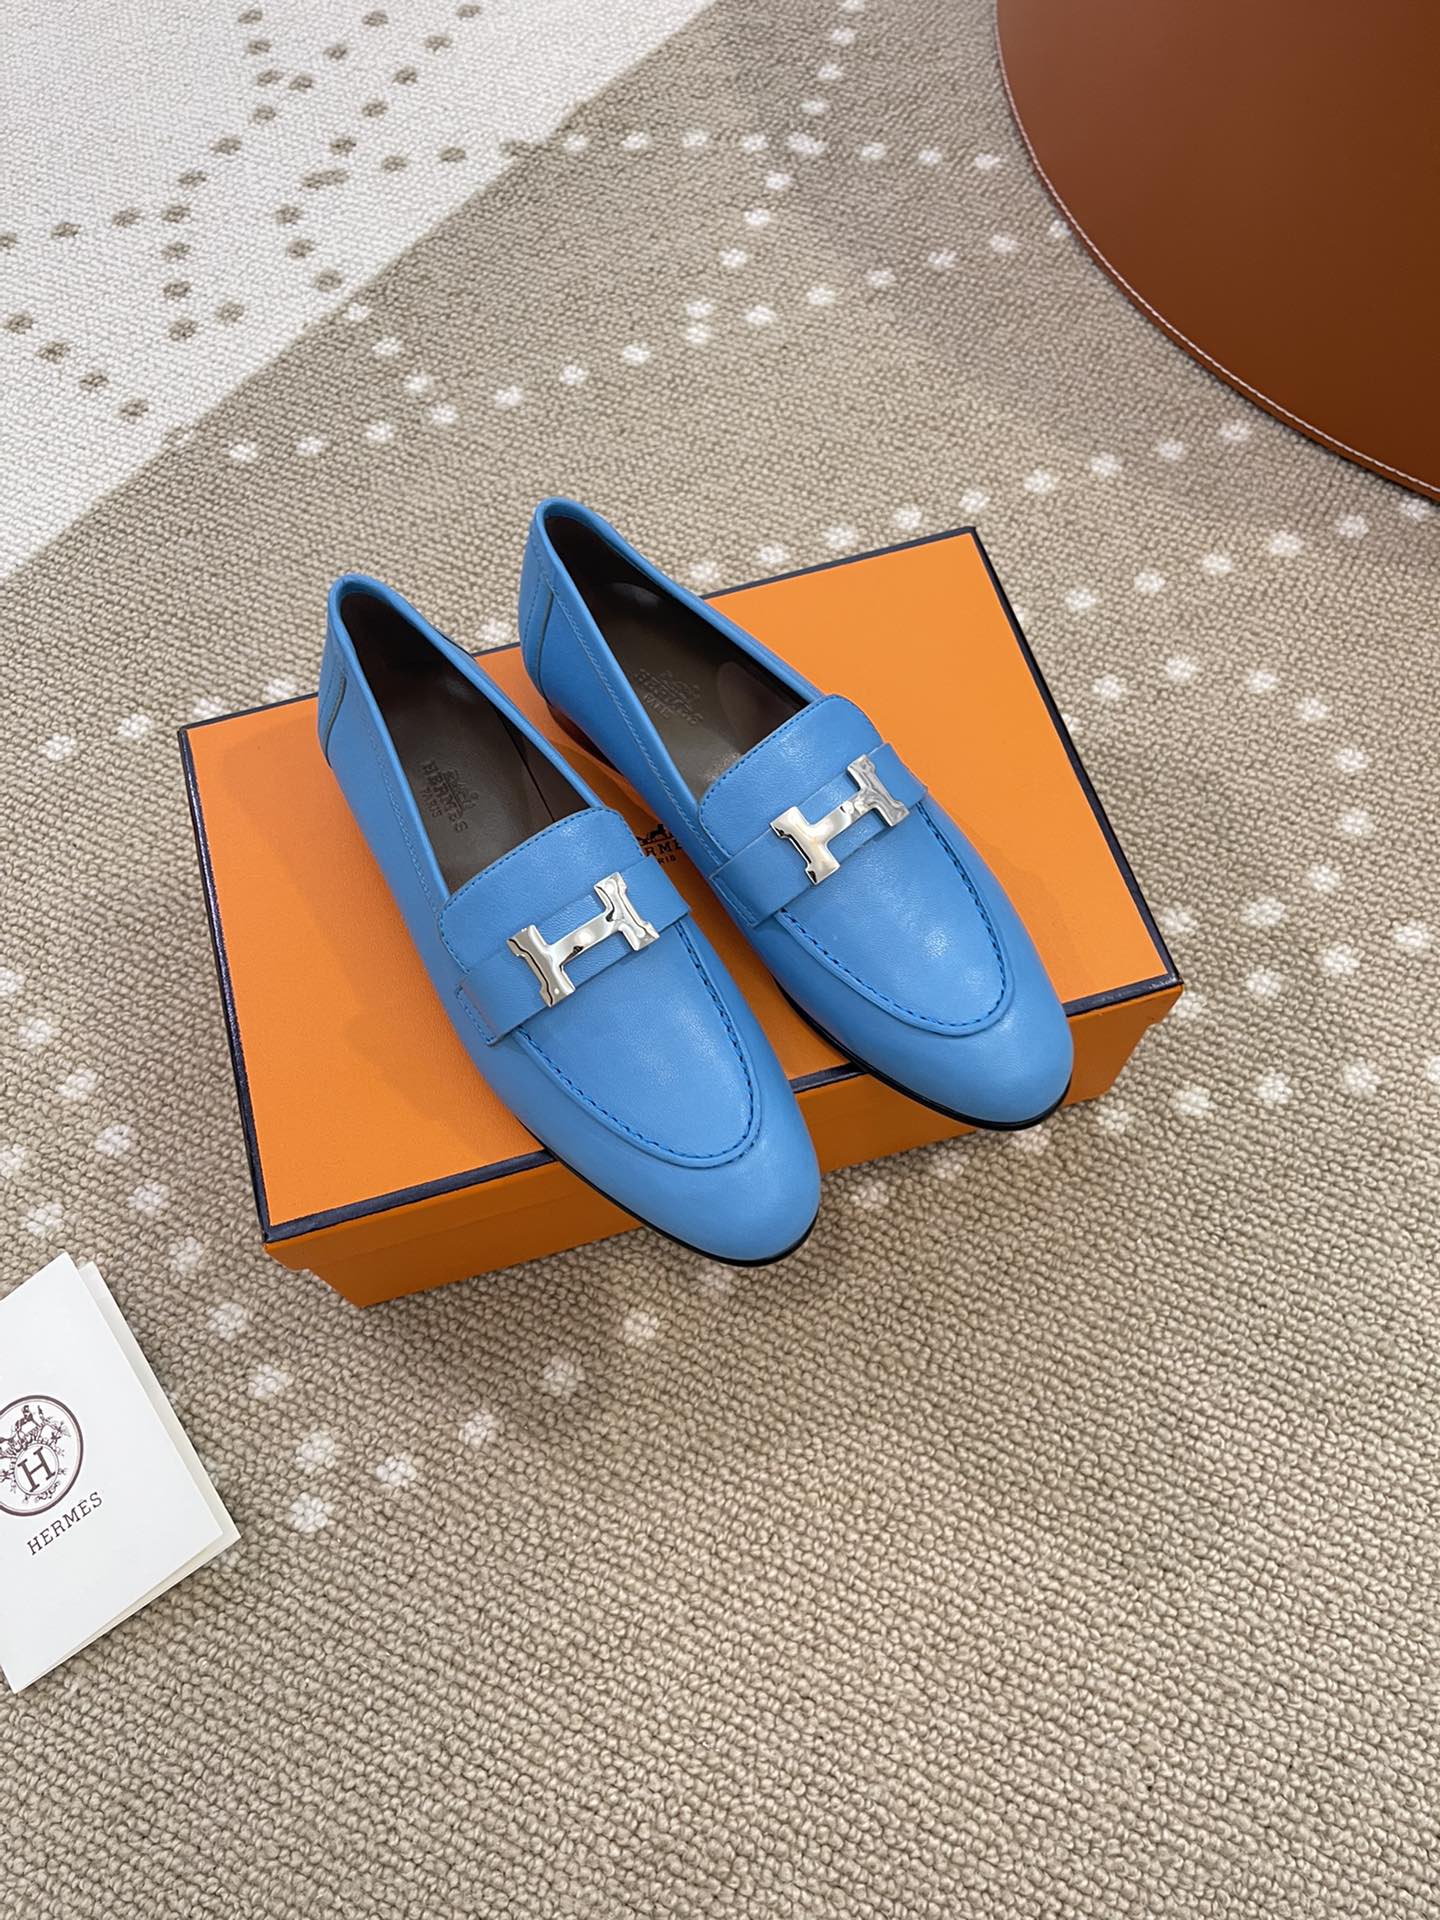 Hermes Shoes Loafers Calfskin Cowhide Genuine Leather Sheepskin